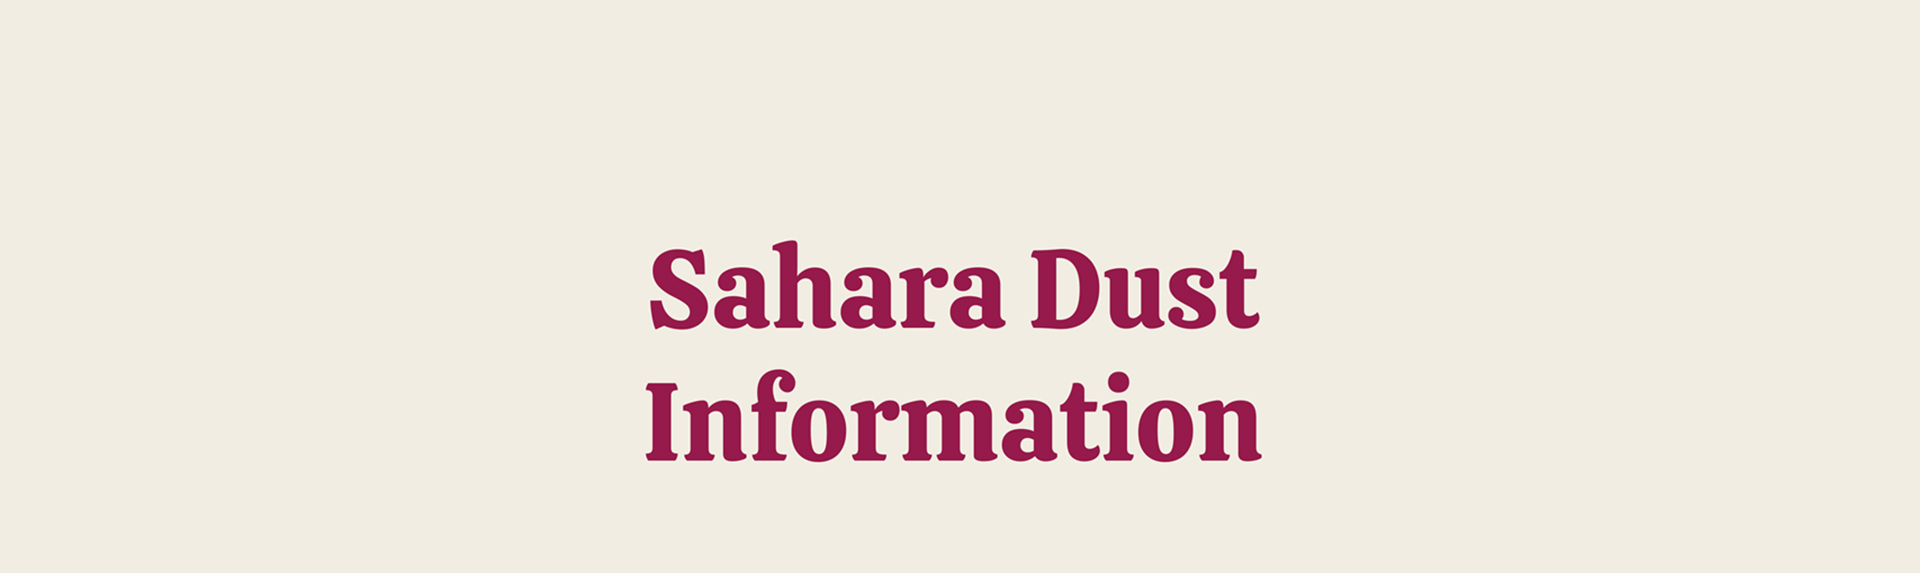 Sahara Dust Information